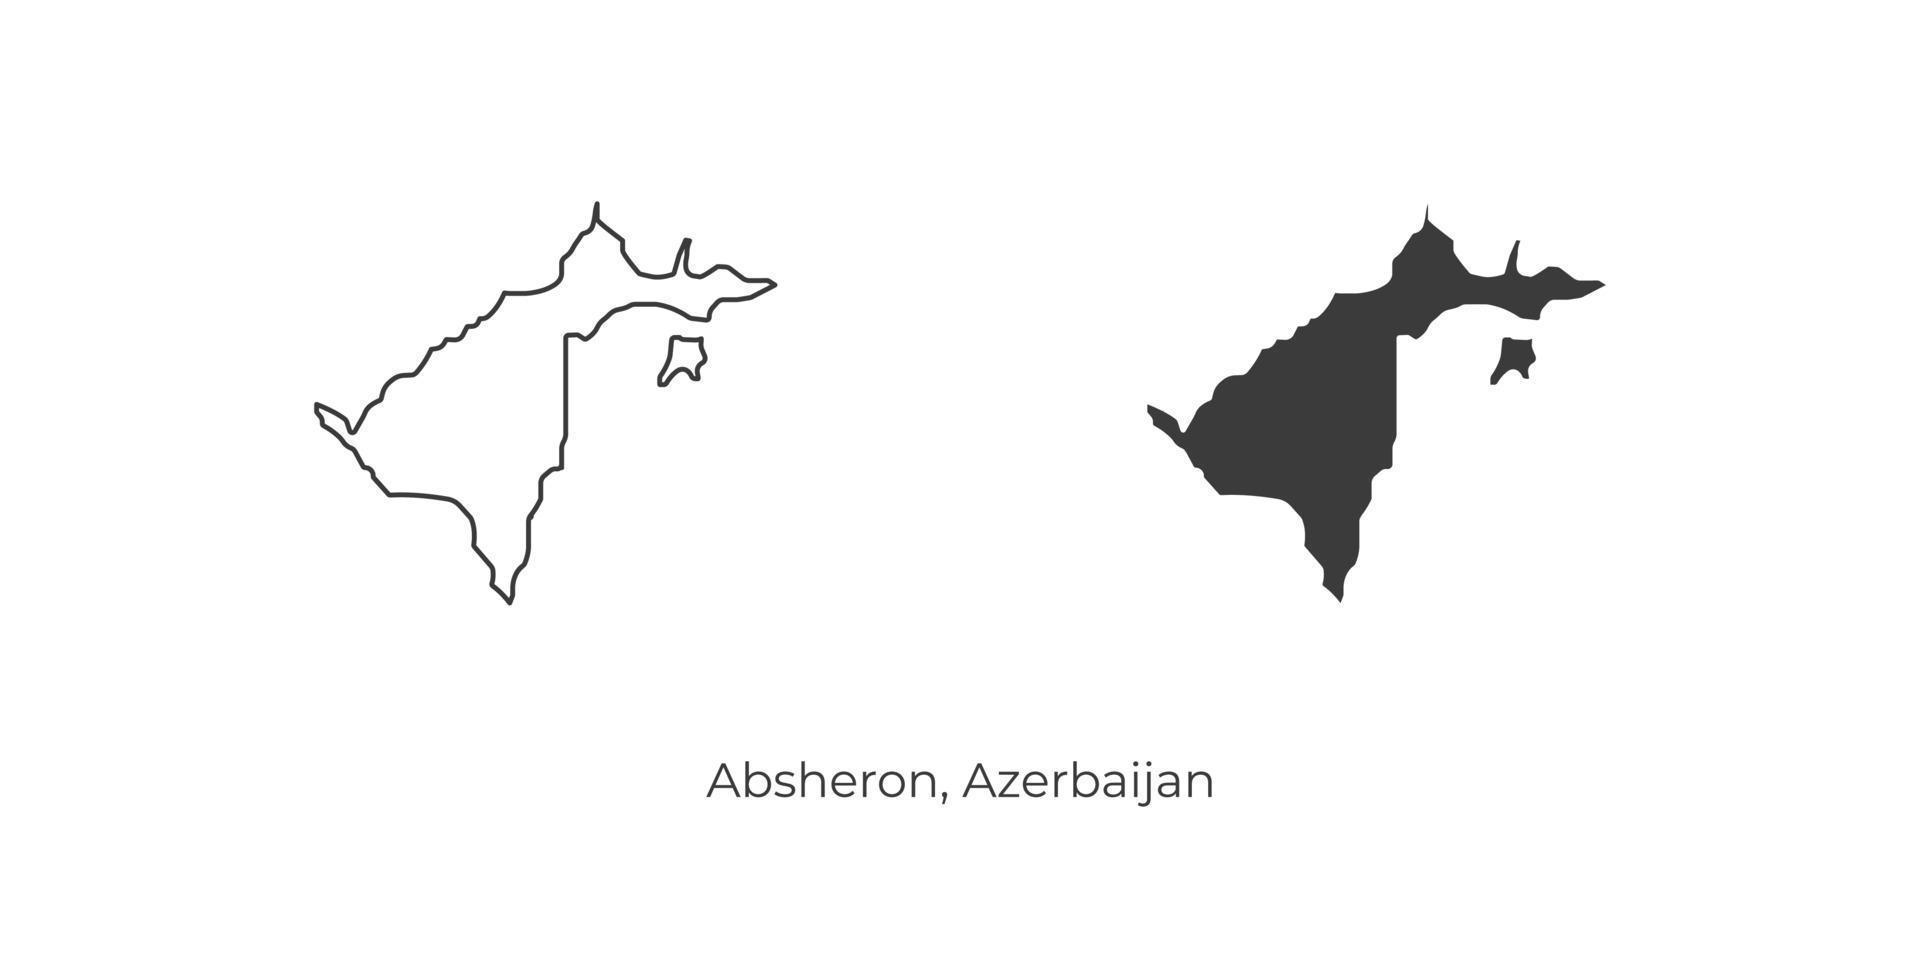 enkel vektorillustration av absheron karta, Azerbajdzjan. vektor